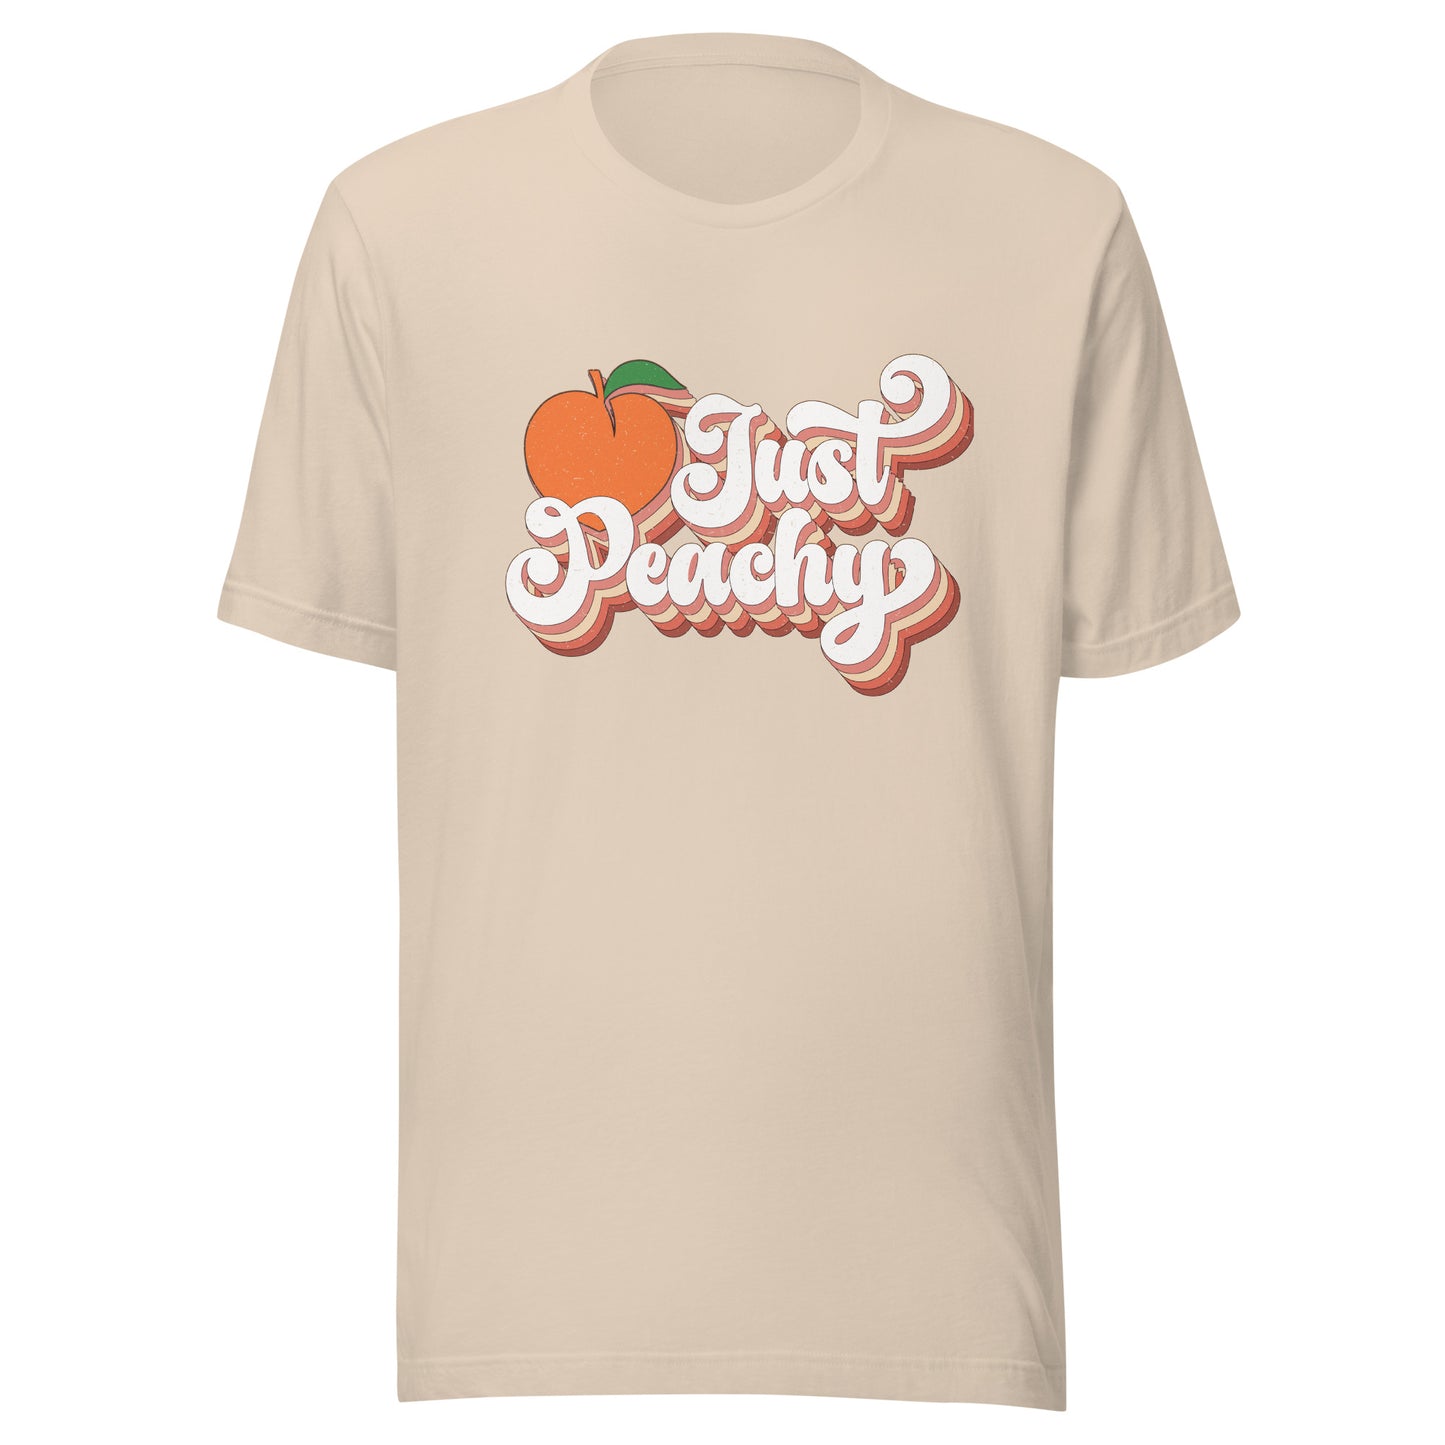 Just Peachy t-shirt